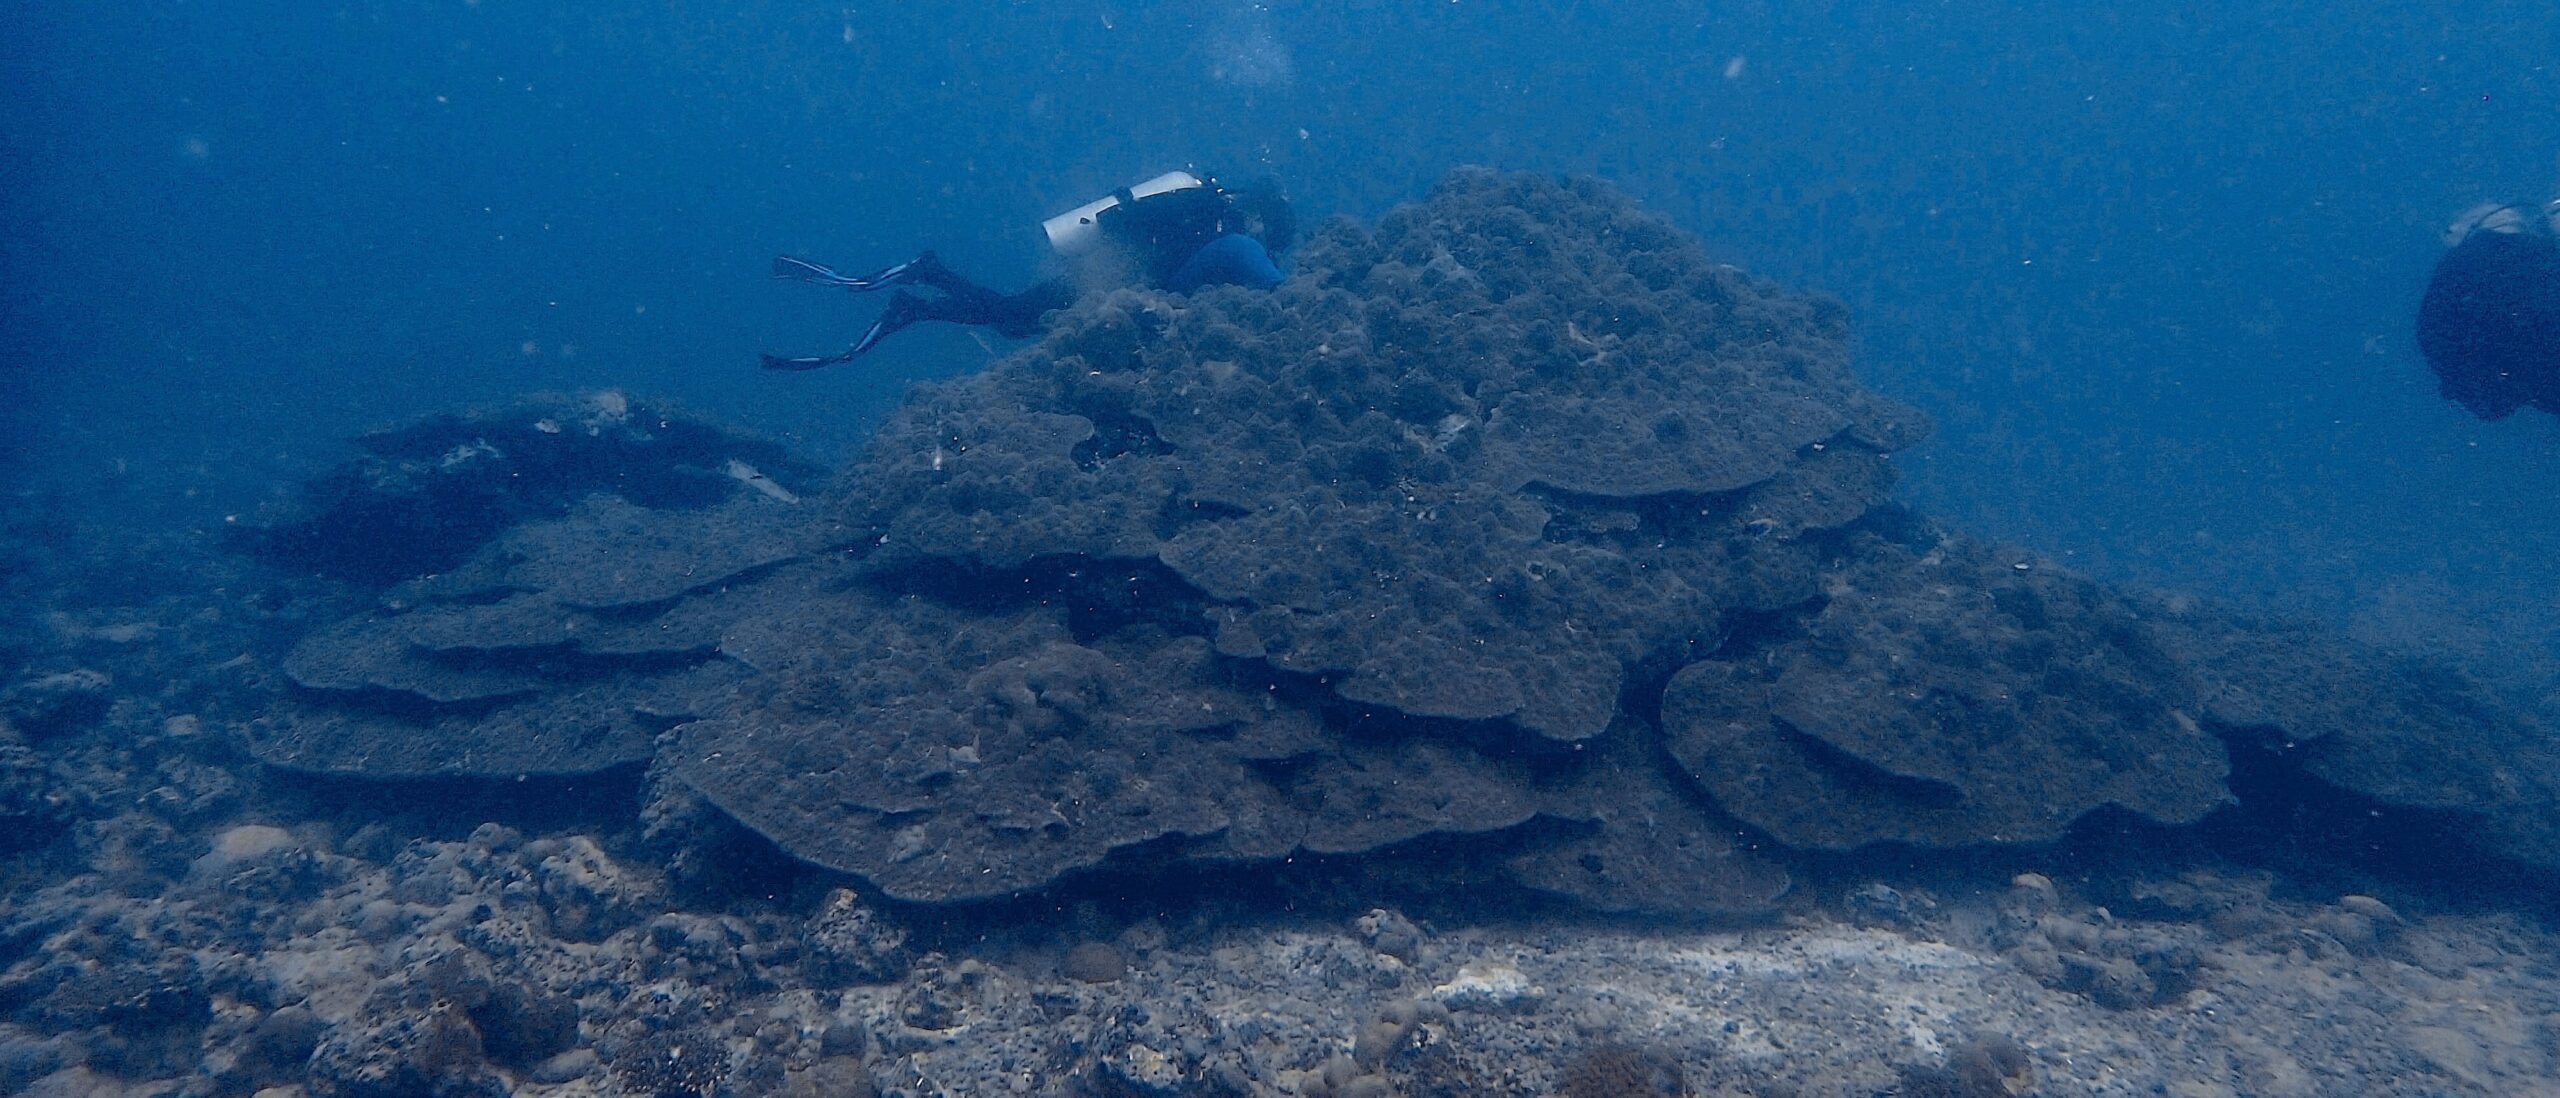 Map the Giants corals marhe center bicocca baa atoll manta ray